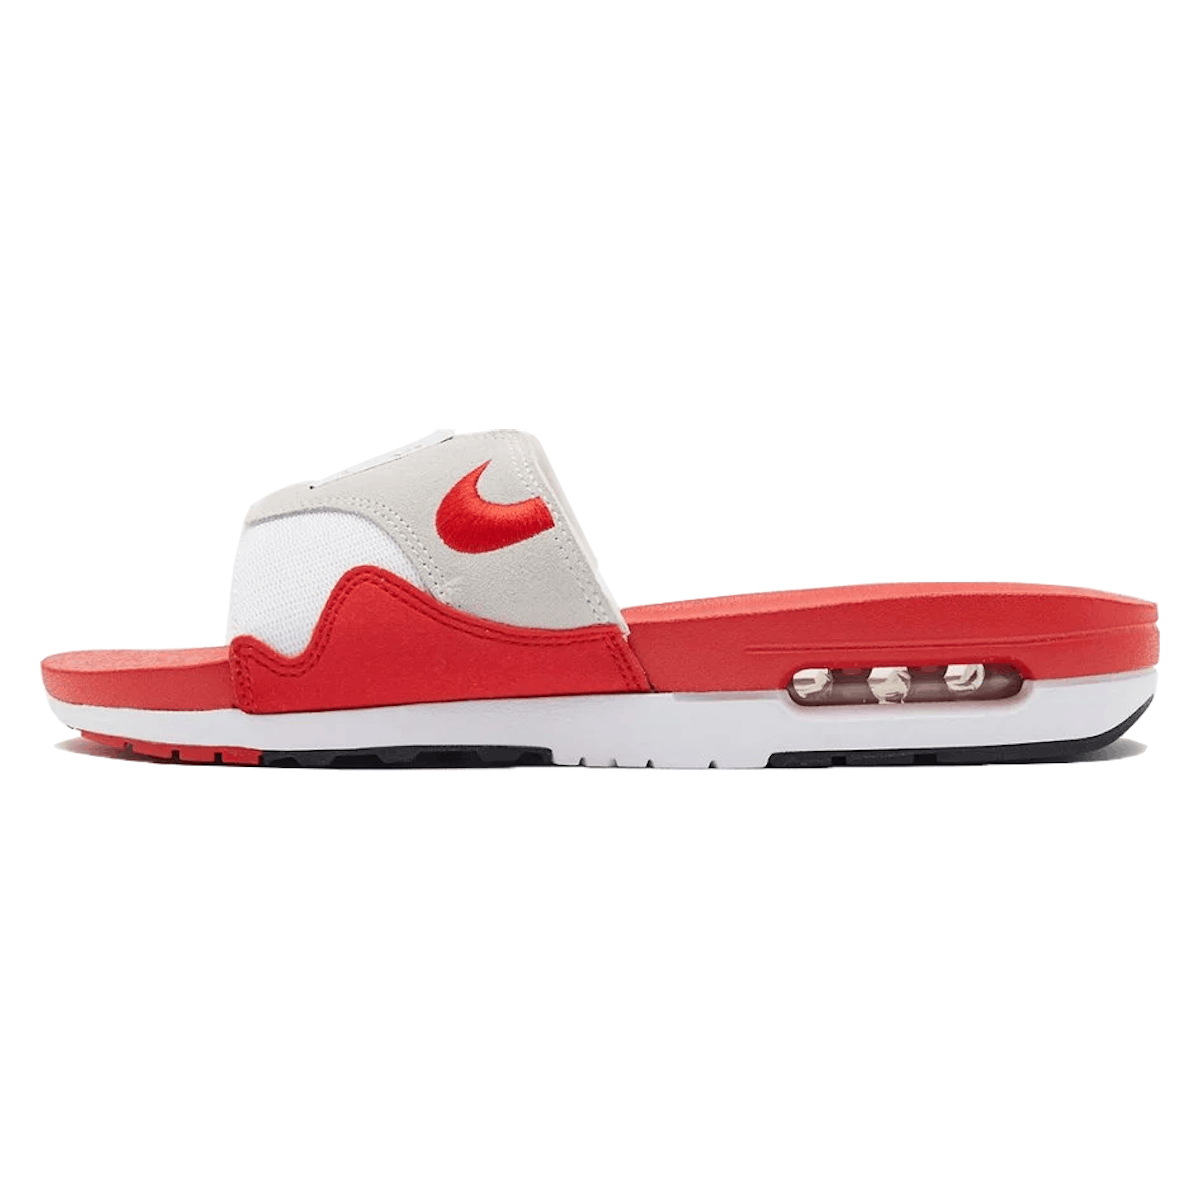 Nike Air Max 1 Slide "University Red"